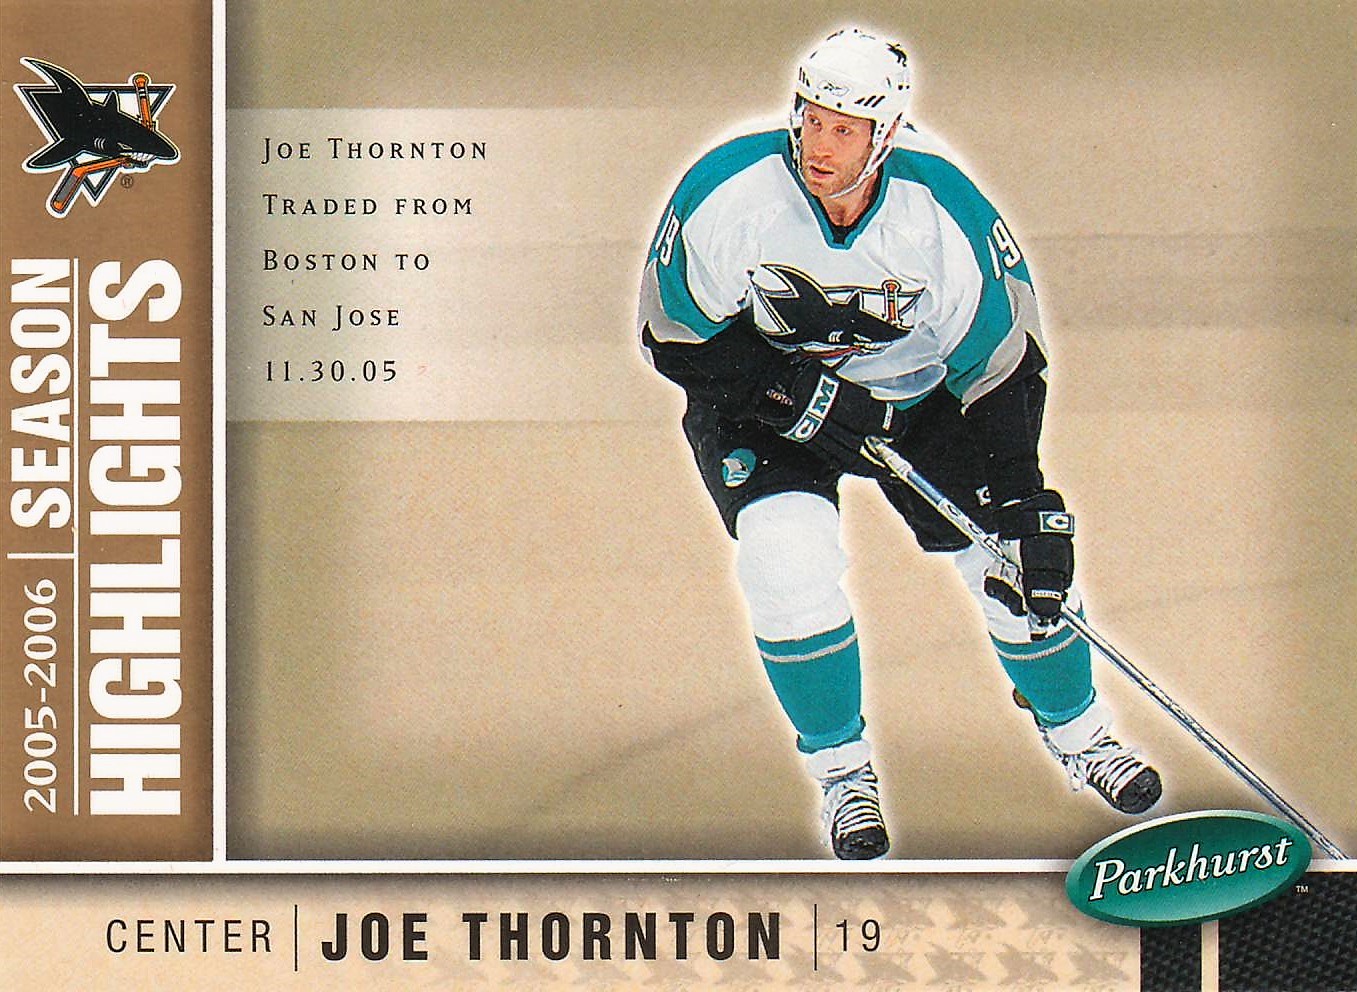 REPORT: Thornton's Back in San Jose